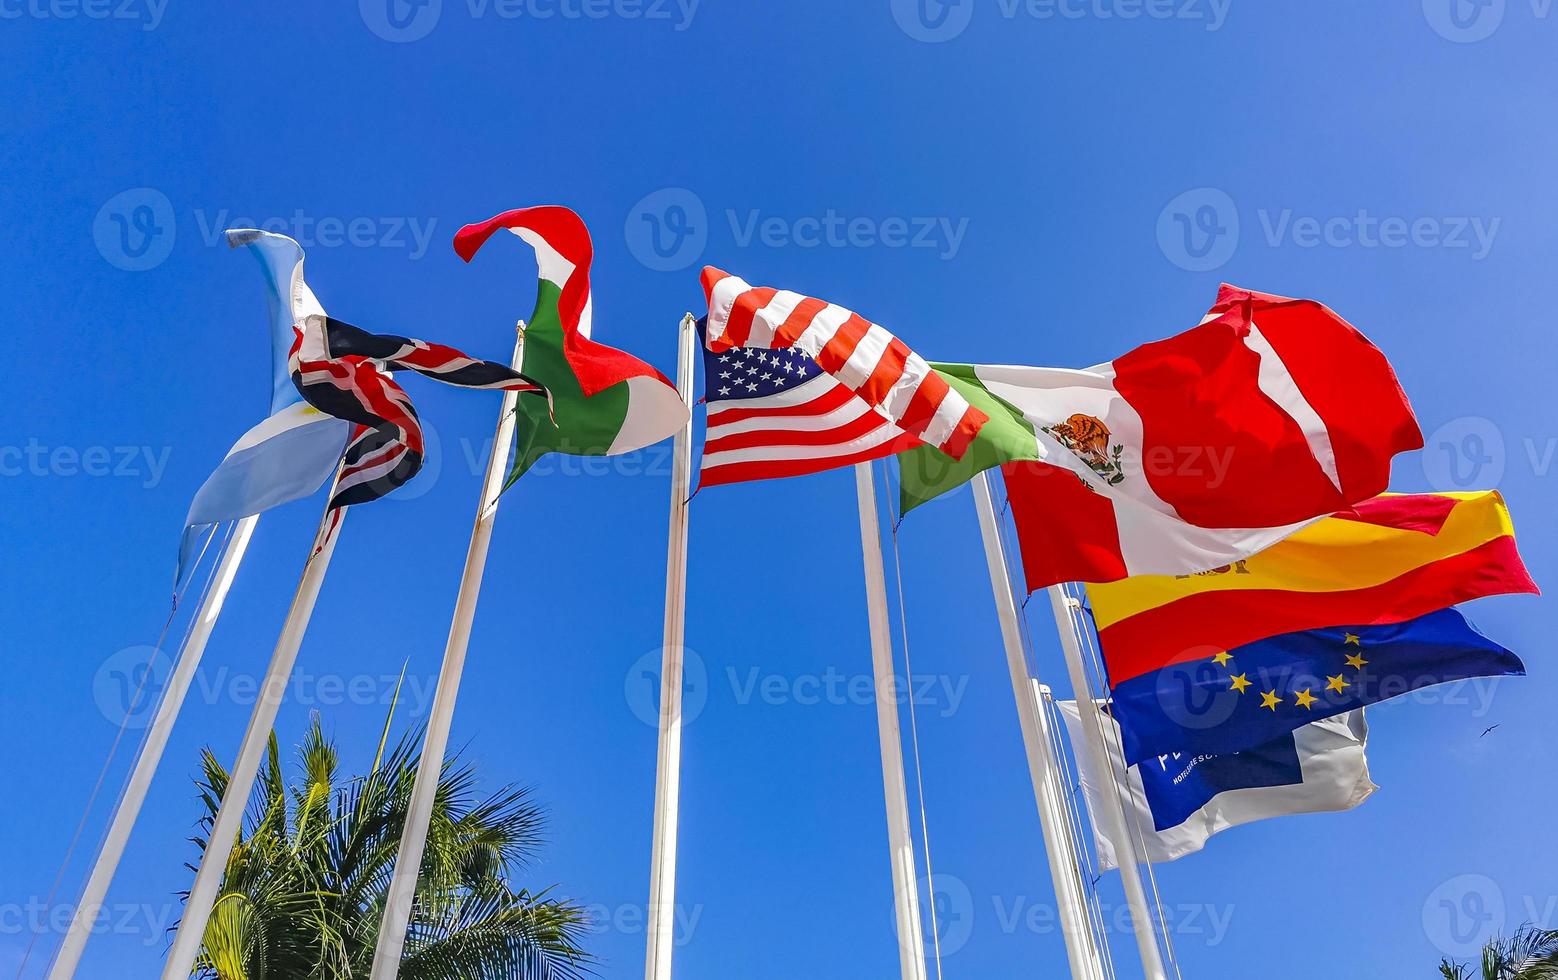 bandeiras de muitos países, como espanha estados unidos canada méxico. foto